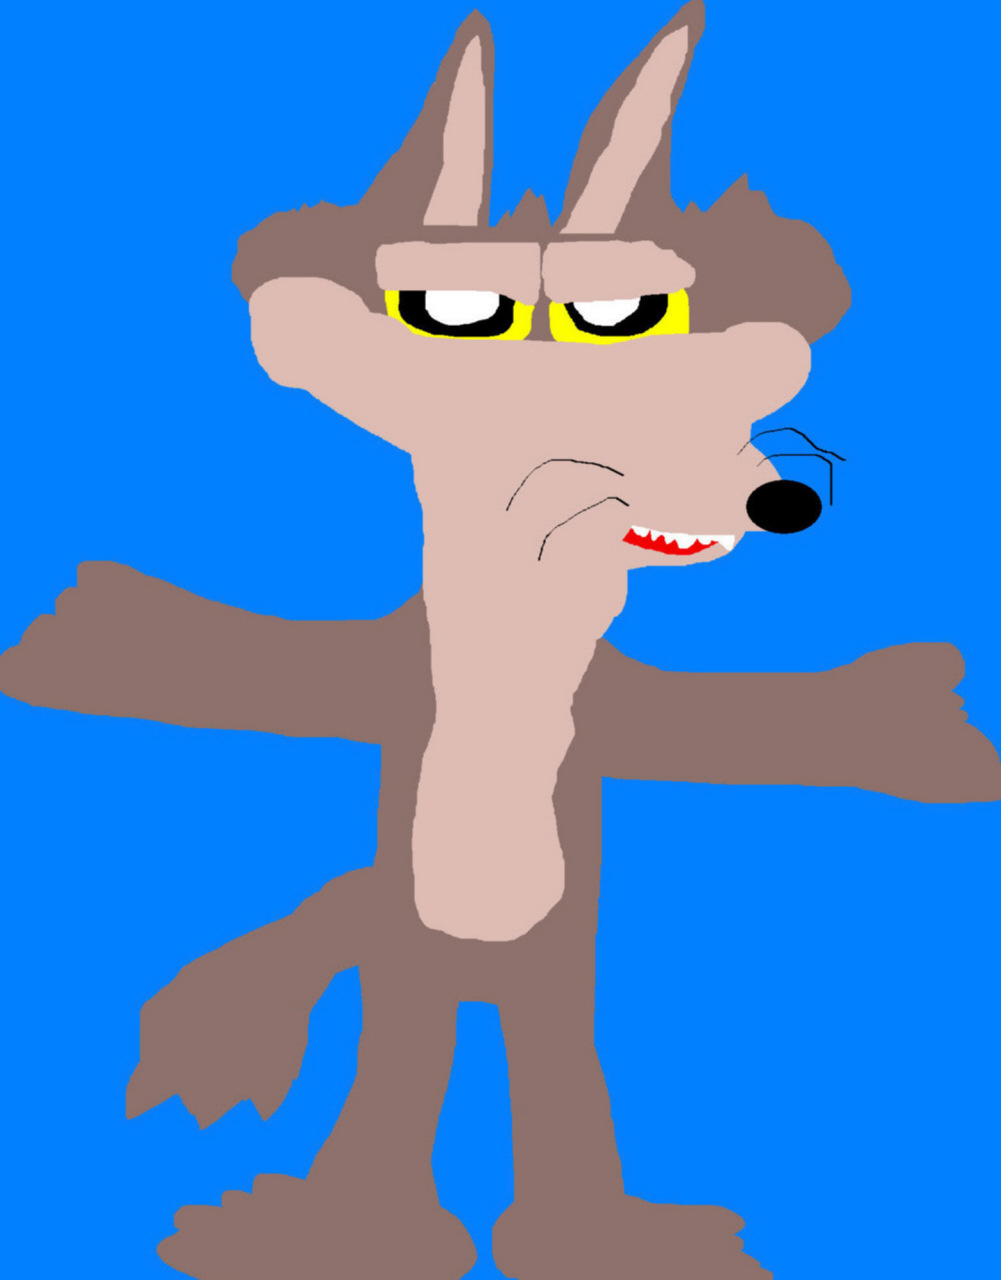 Random Wile E Coyote MS Paint by Falconlobo